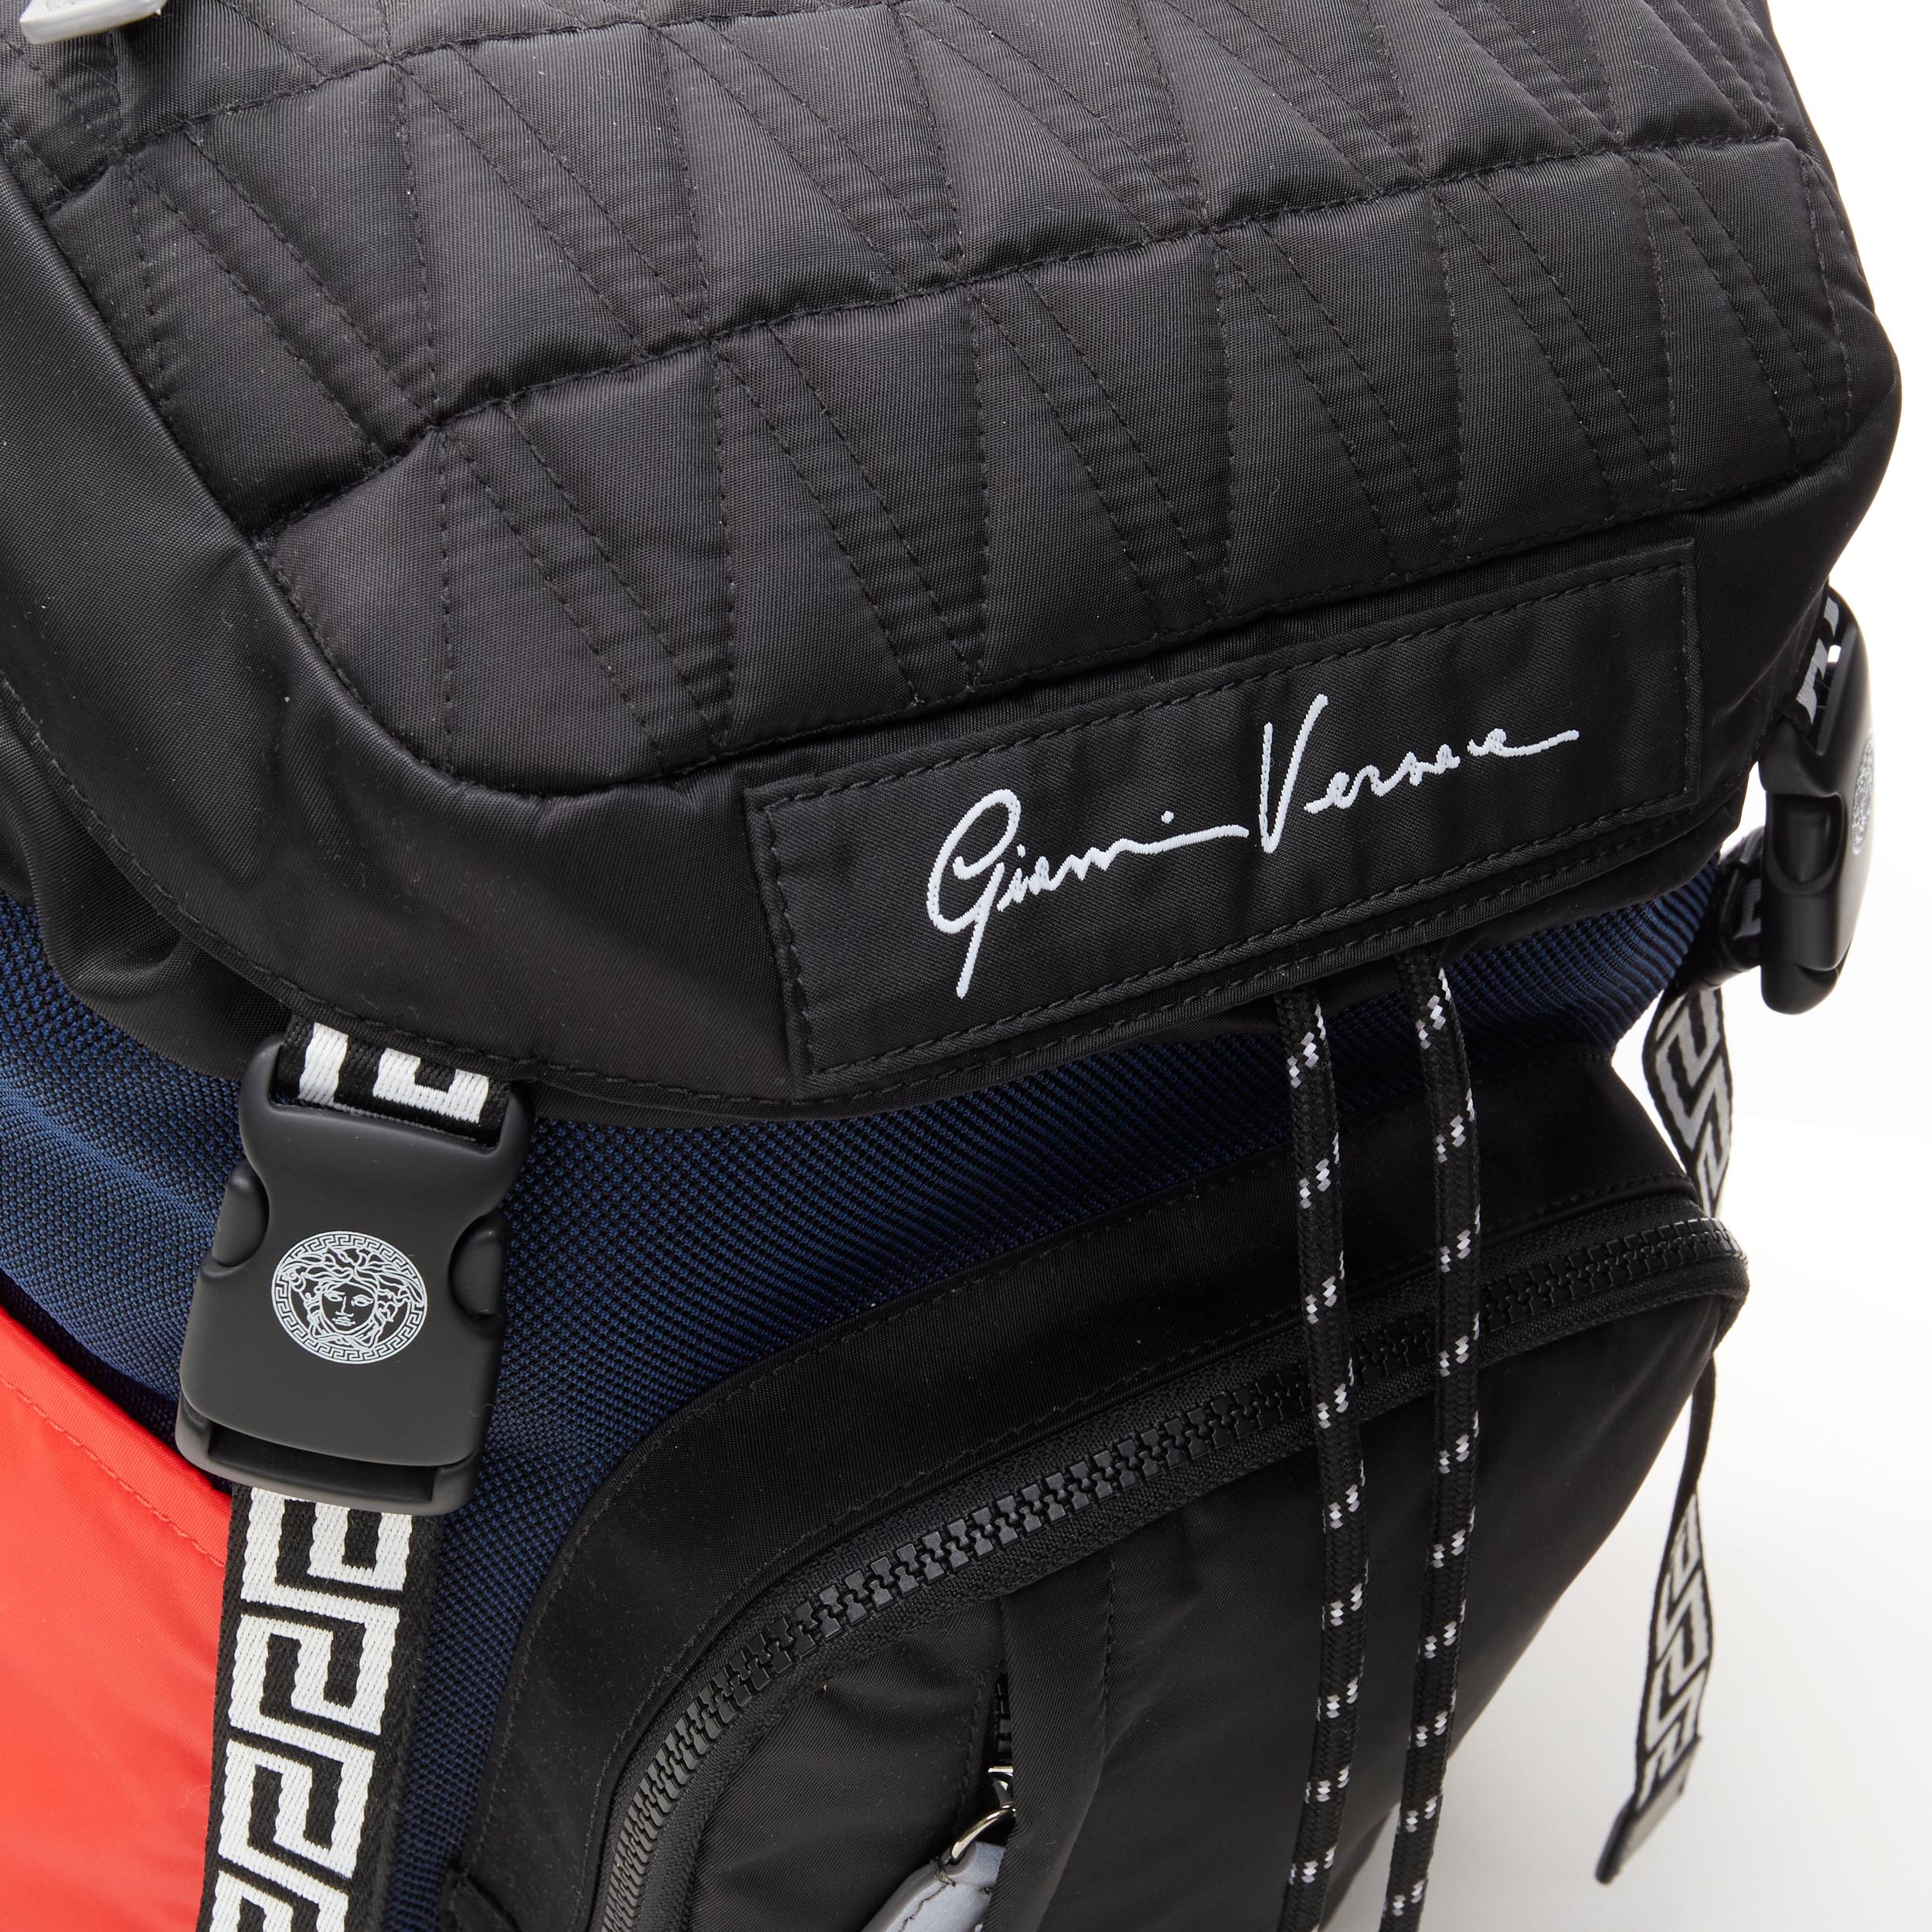 new VERSACE V Code Gianni Signature black red nylon Greca backpack
Reference: TGAS/C00859
Brand: Versace
Designer: Donatella Versace
Model: DFZ8072 DMXTEX K052E
Collection: V Code
Material: Nylon
Color: Black, Red
Pattern: Solid
Closure: